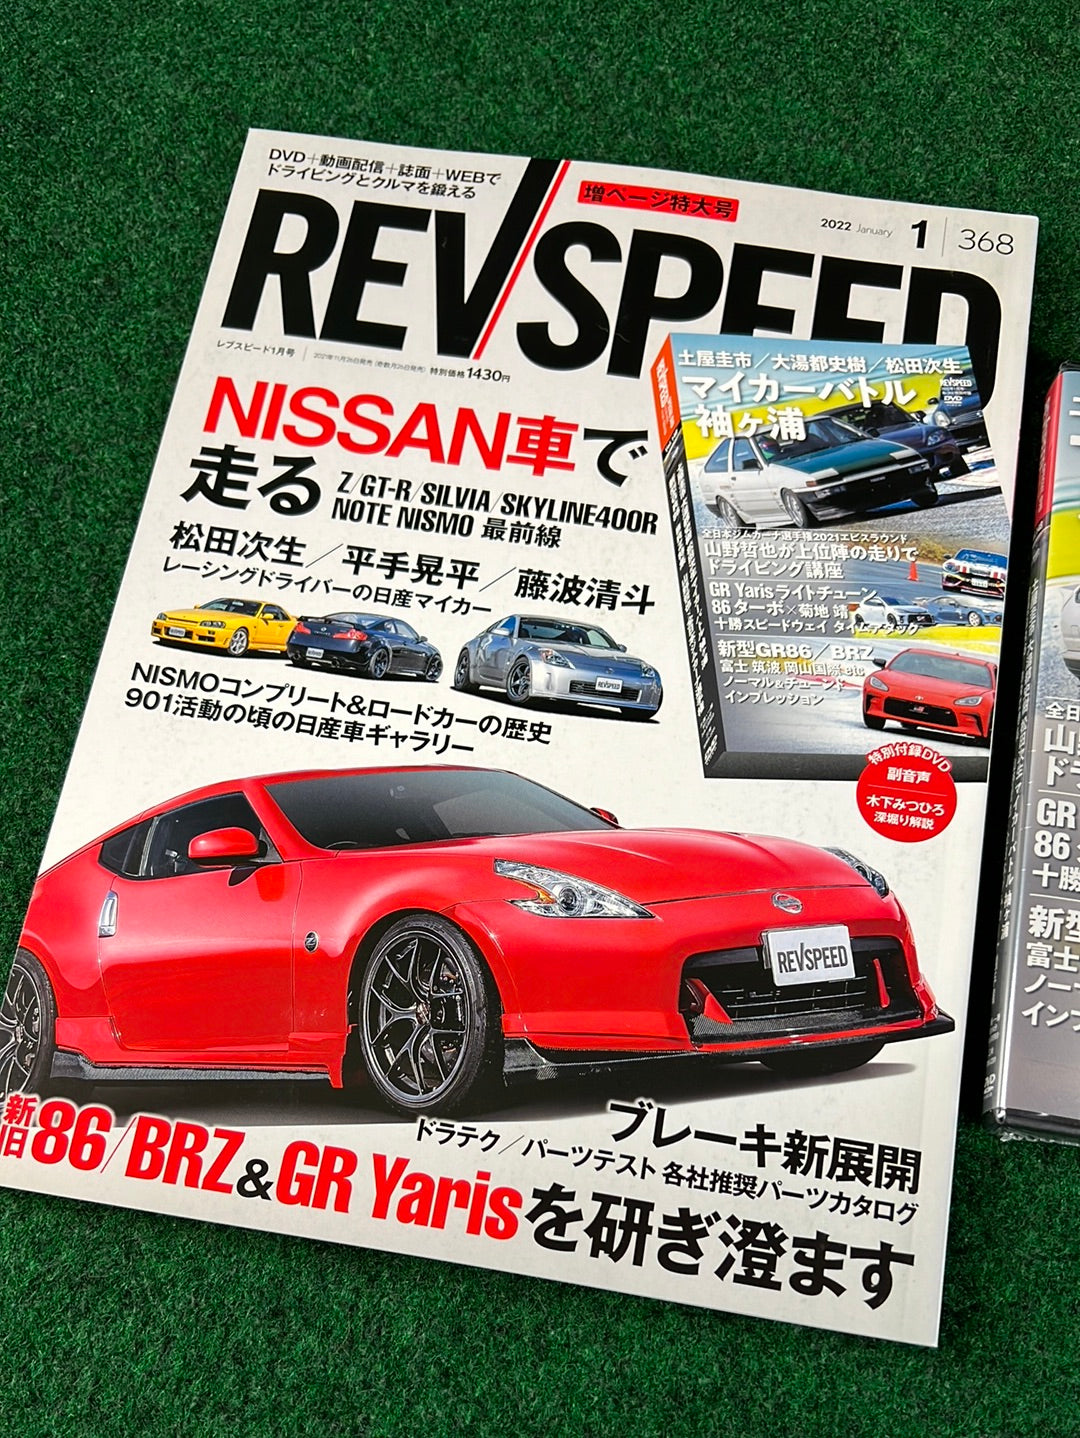 REVSPEED Magazine & DVD - January 2022